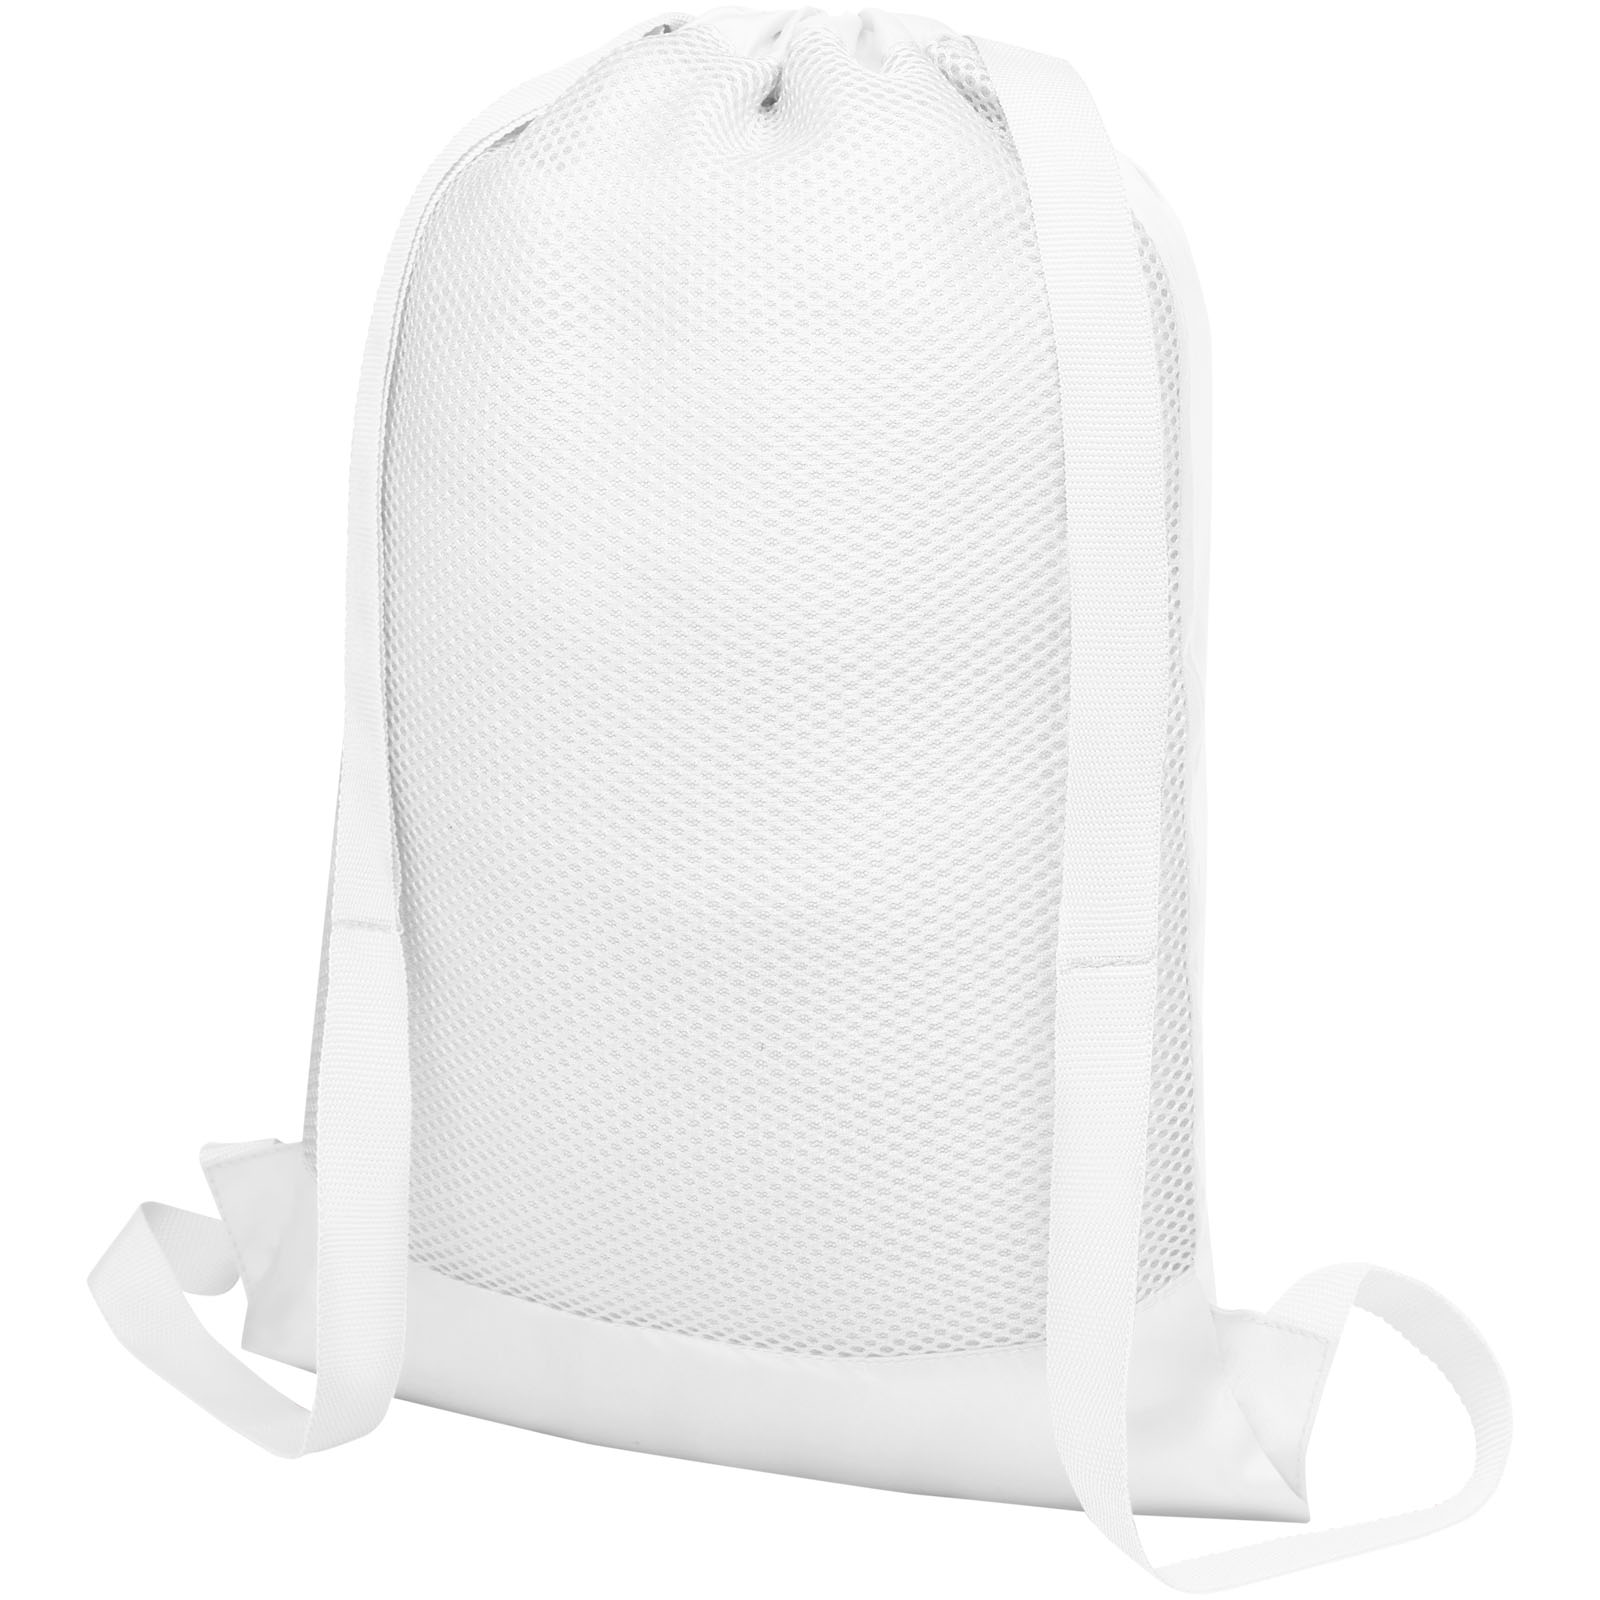 Advertising Drawstring Bags - Nadi mesh drawstring bag 5L